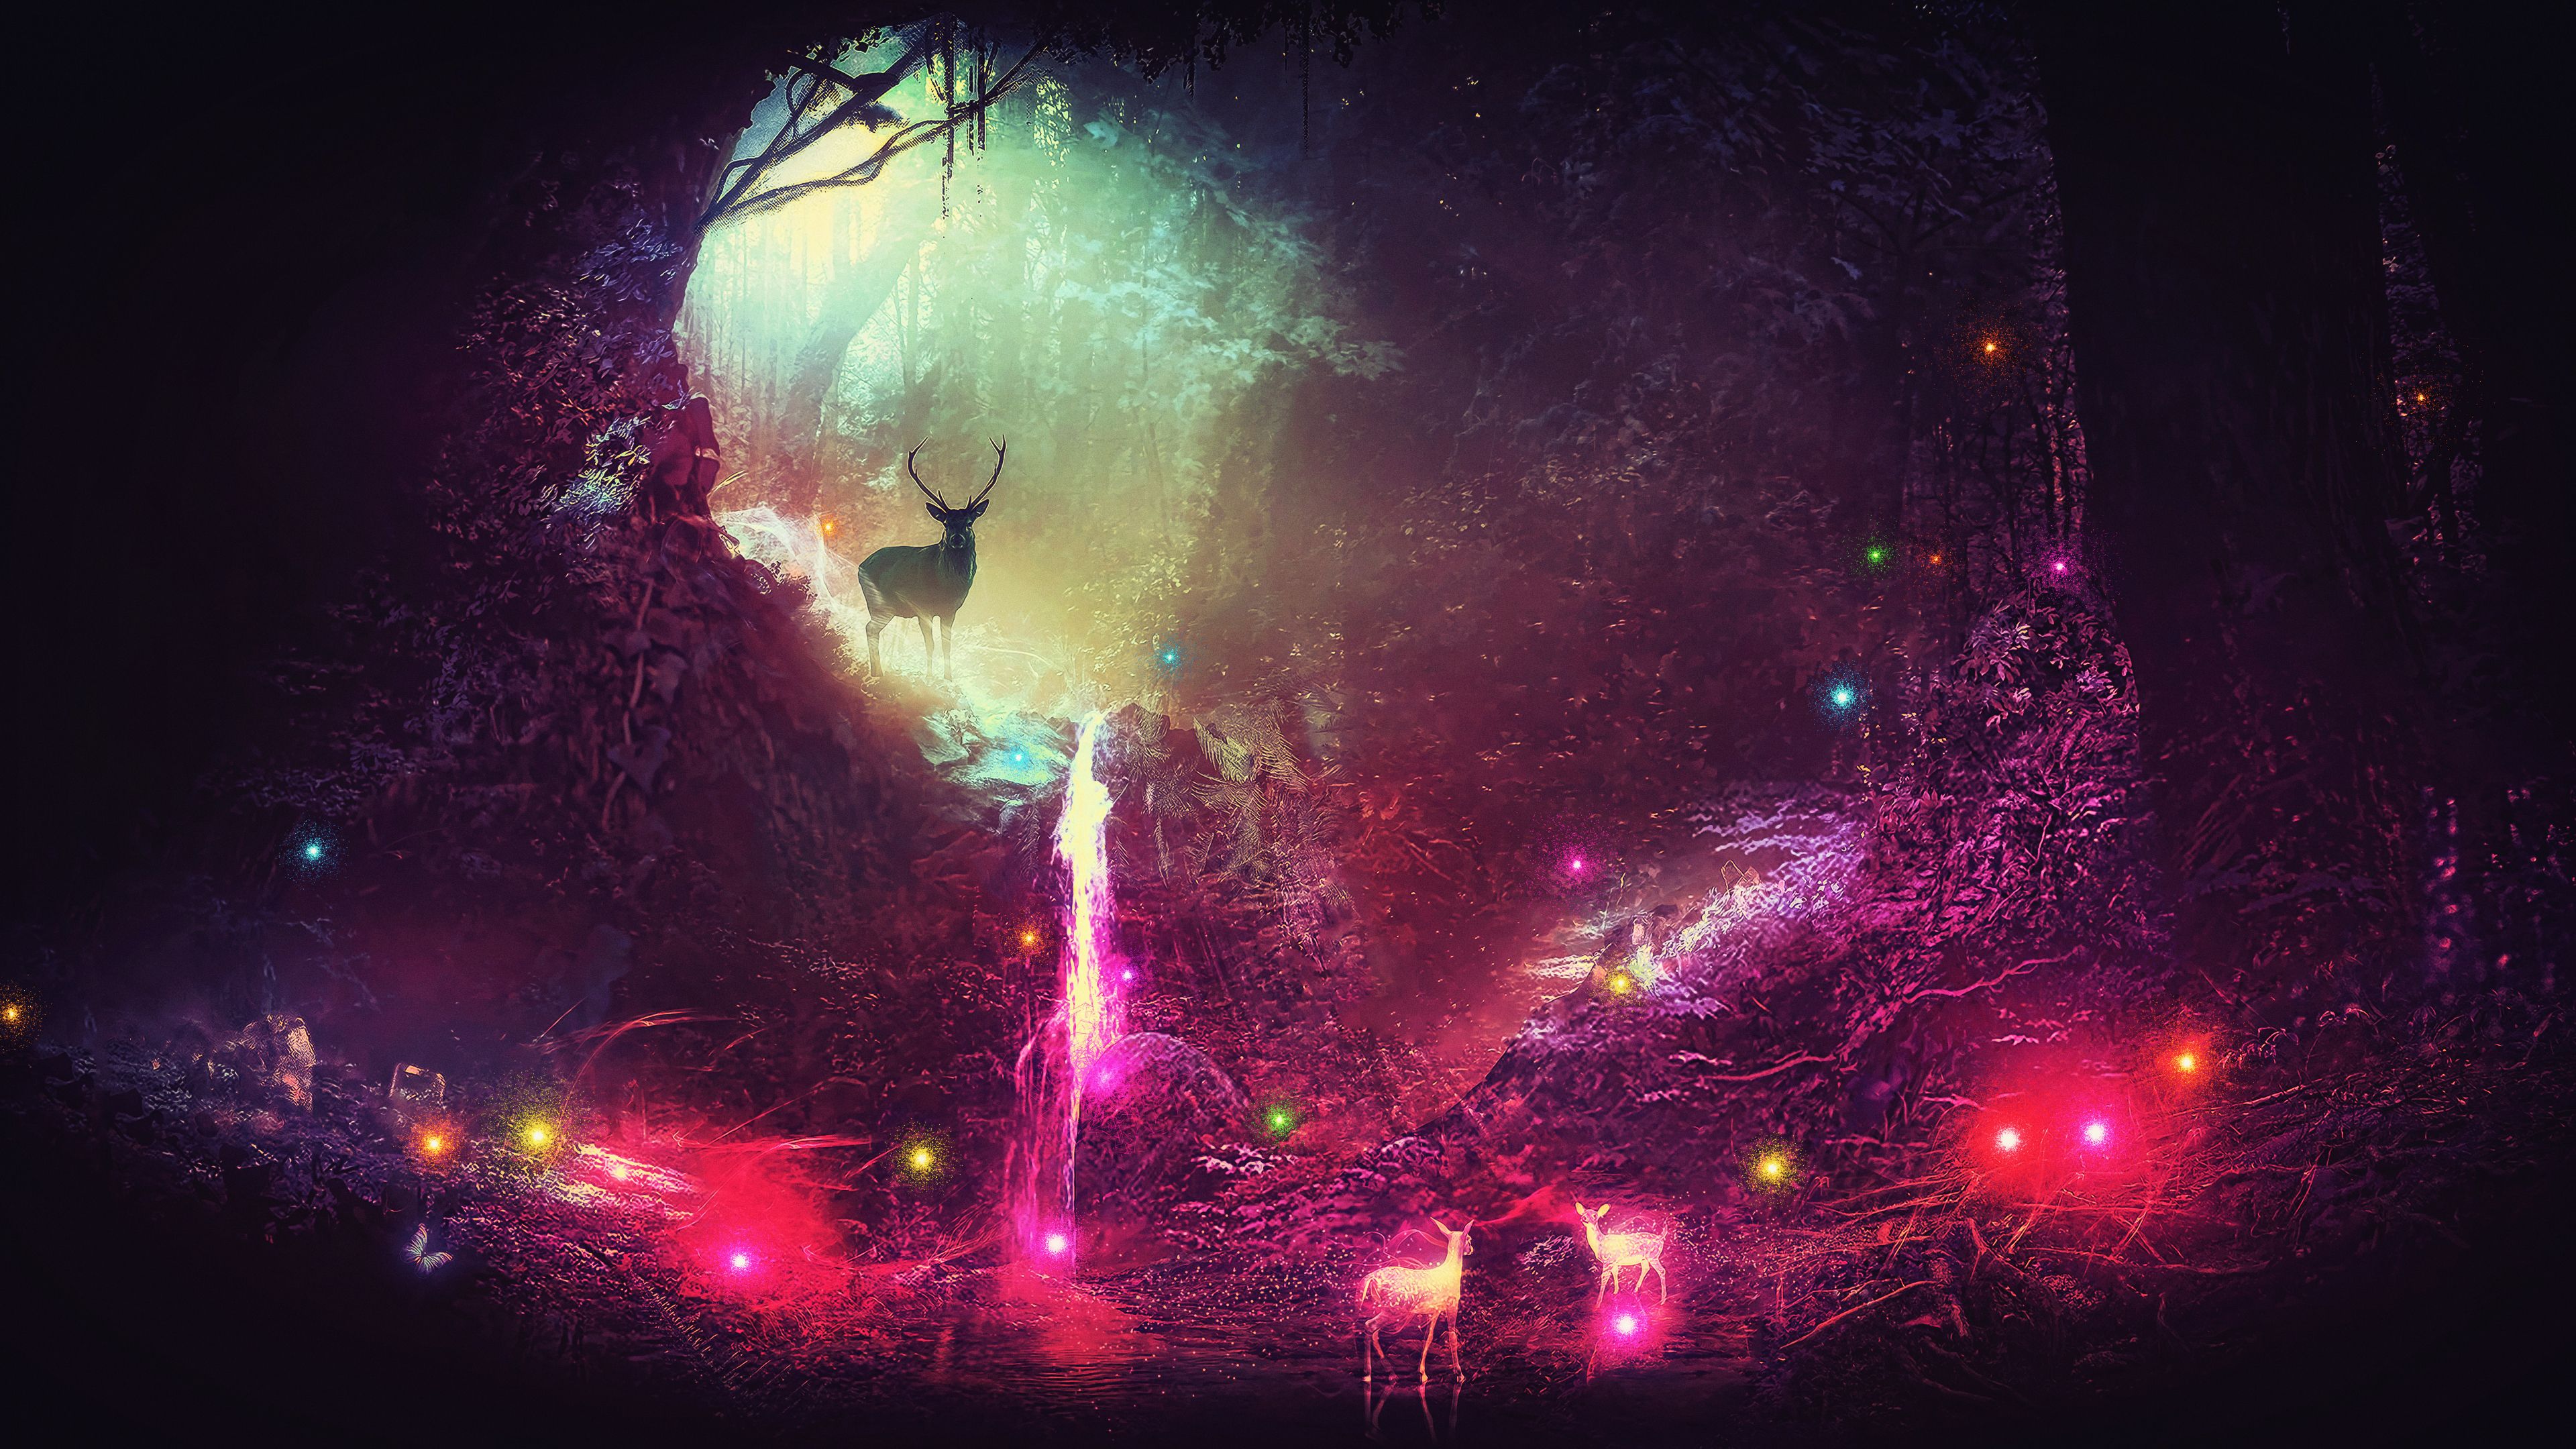 Fantasy Magic Deer Artwork 4k, HD Artist, 4k Wallpaper, Image, Background, Photo and Picture